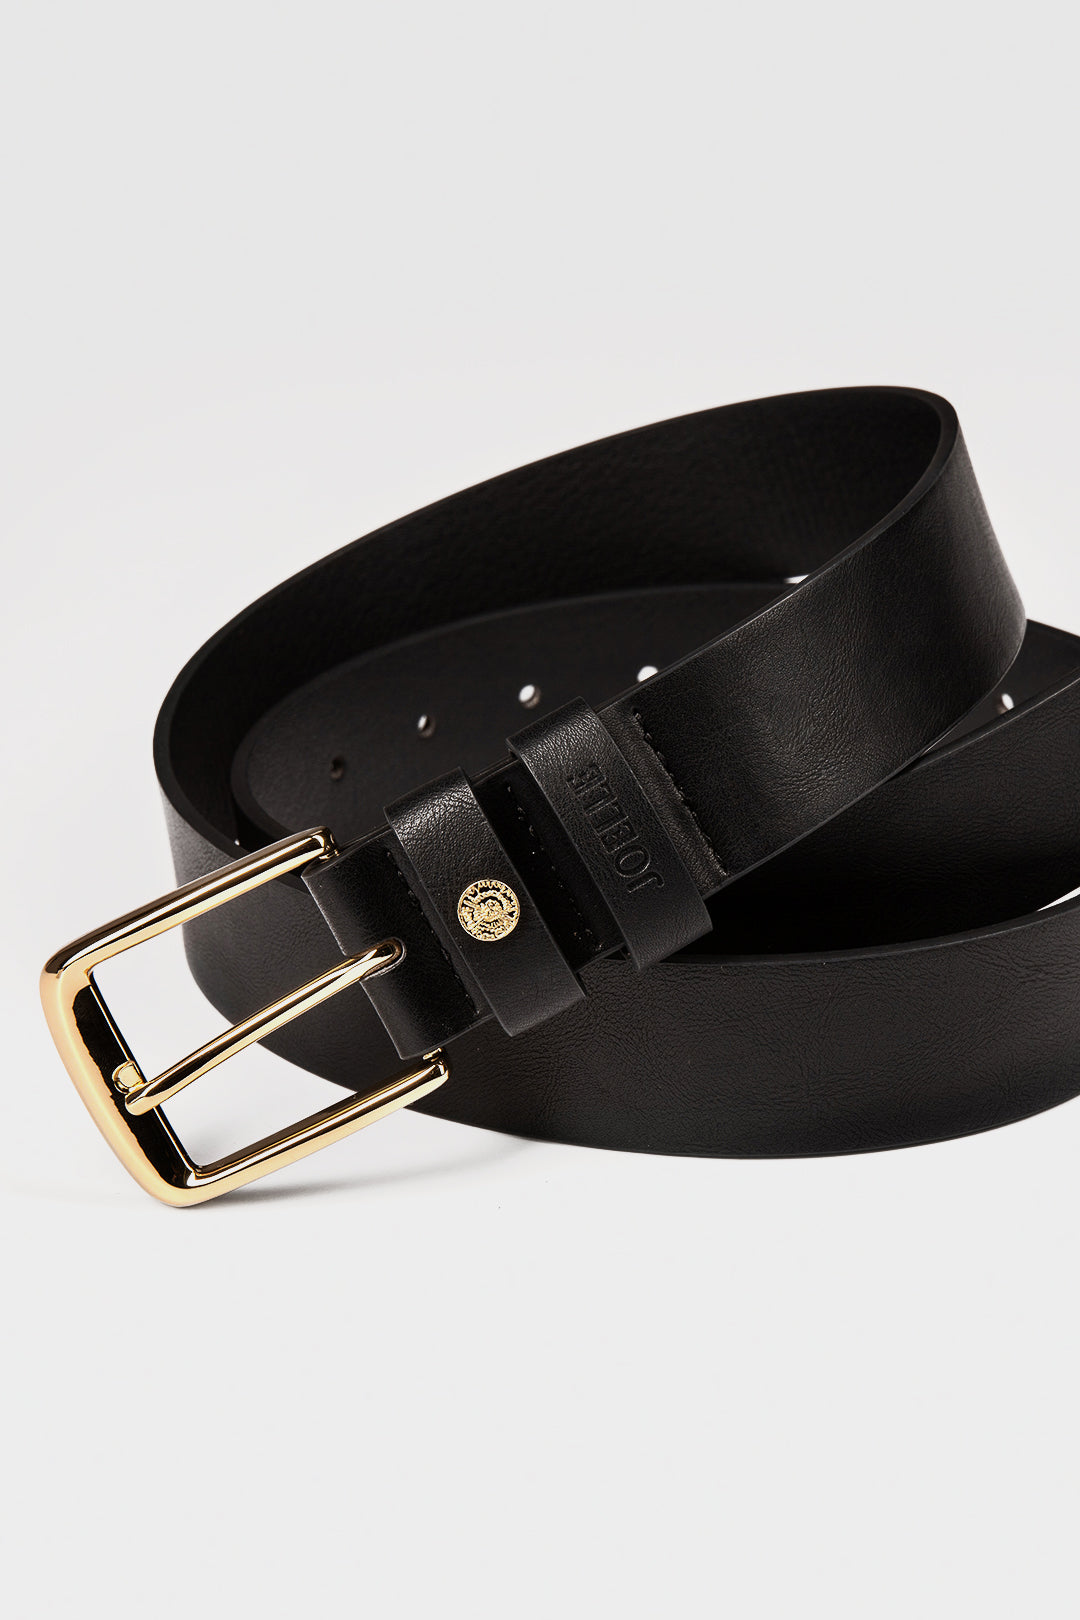 Black belt with gold buckle | Adrien